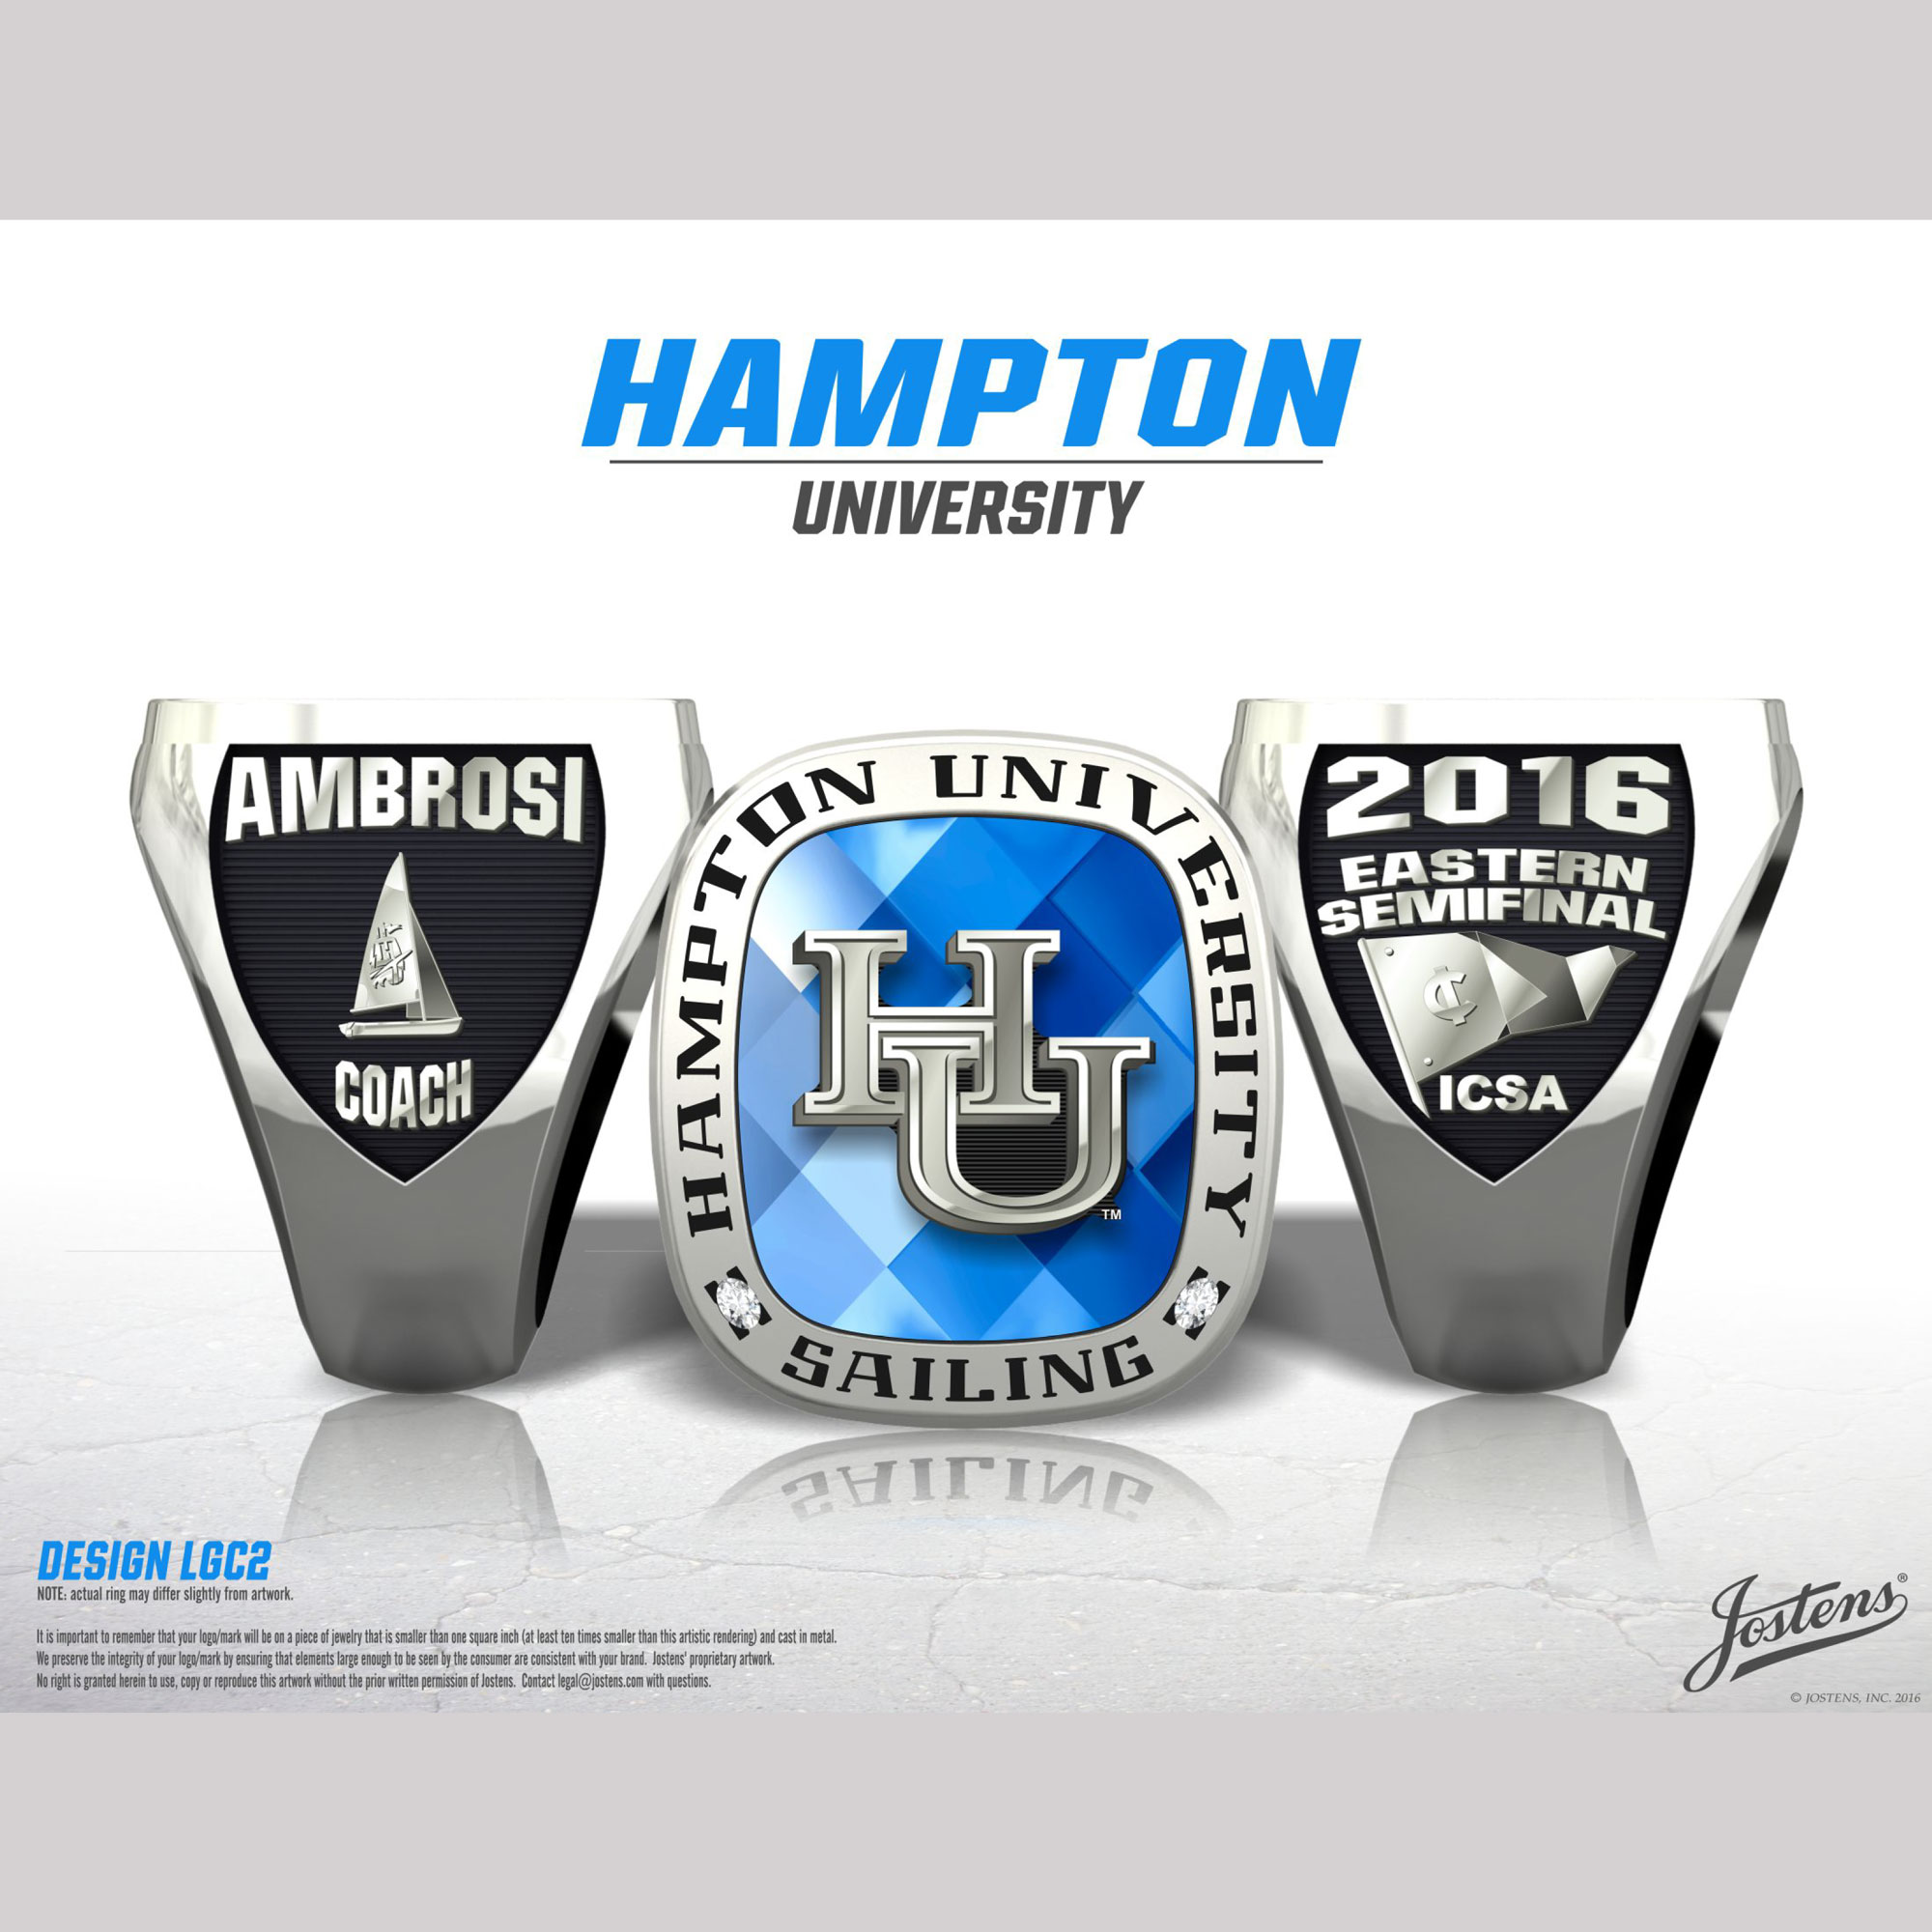 Hampton University Coed Sailing 2016 Eastern Semifinal Championship Ring